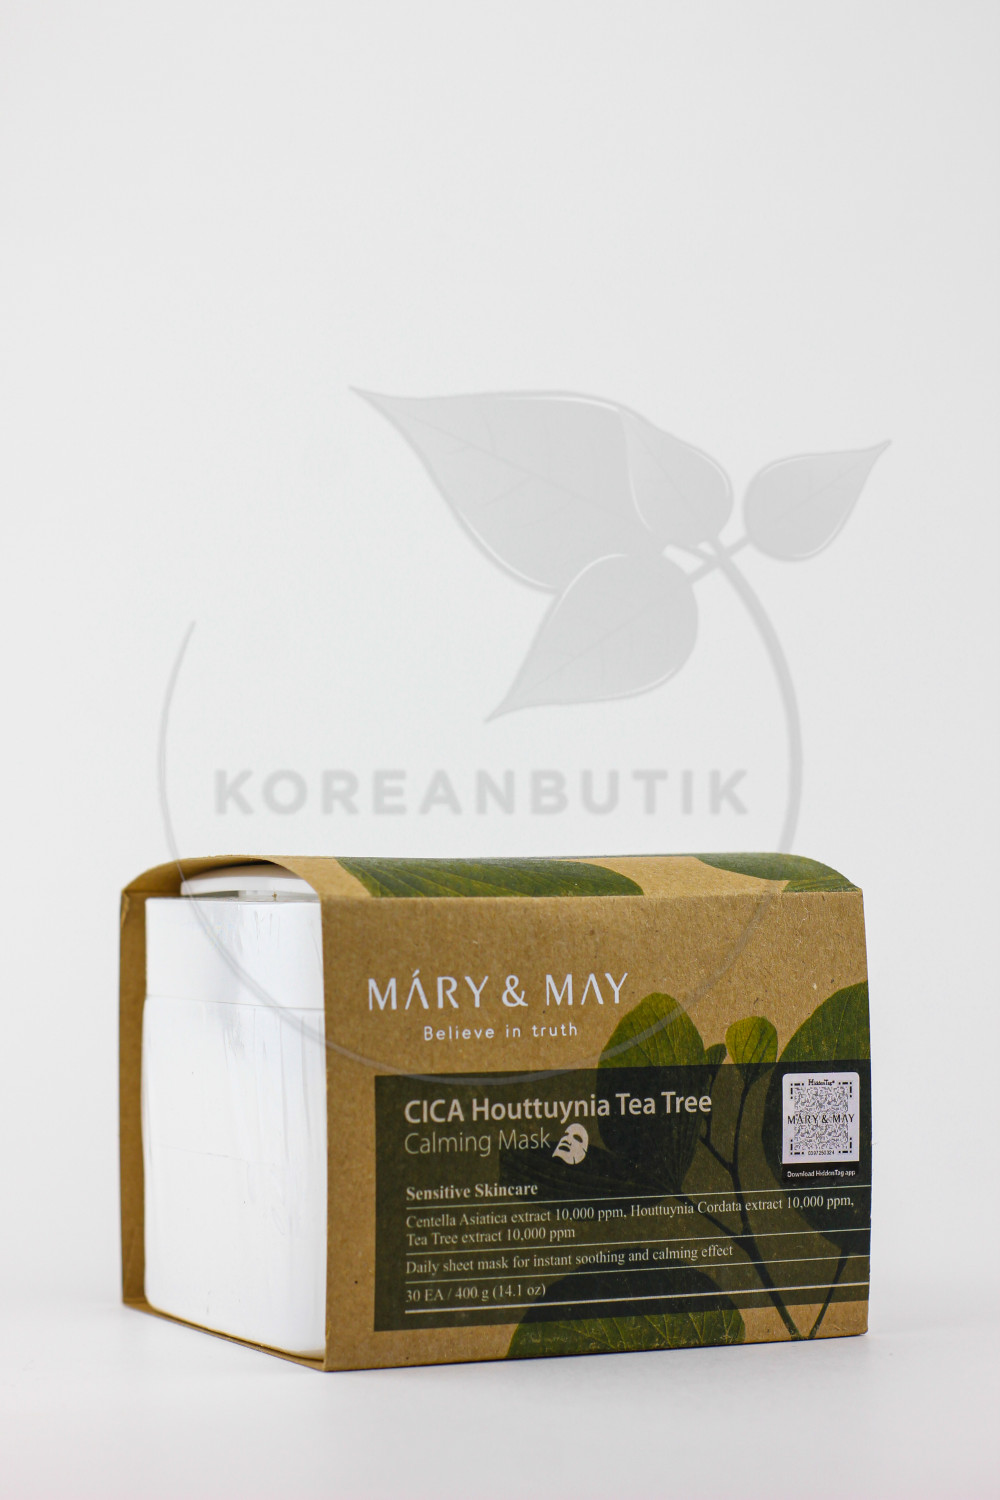  Mary&May Cica Houttuynia Tea Tree Calming Mask 30ea 